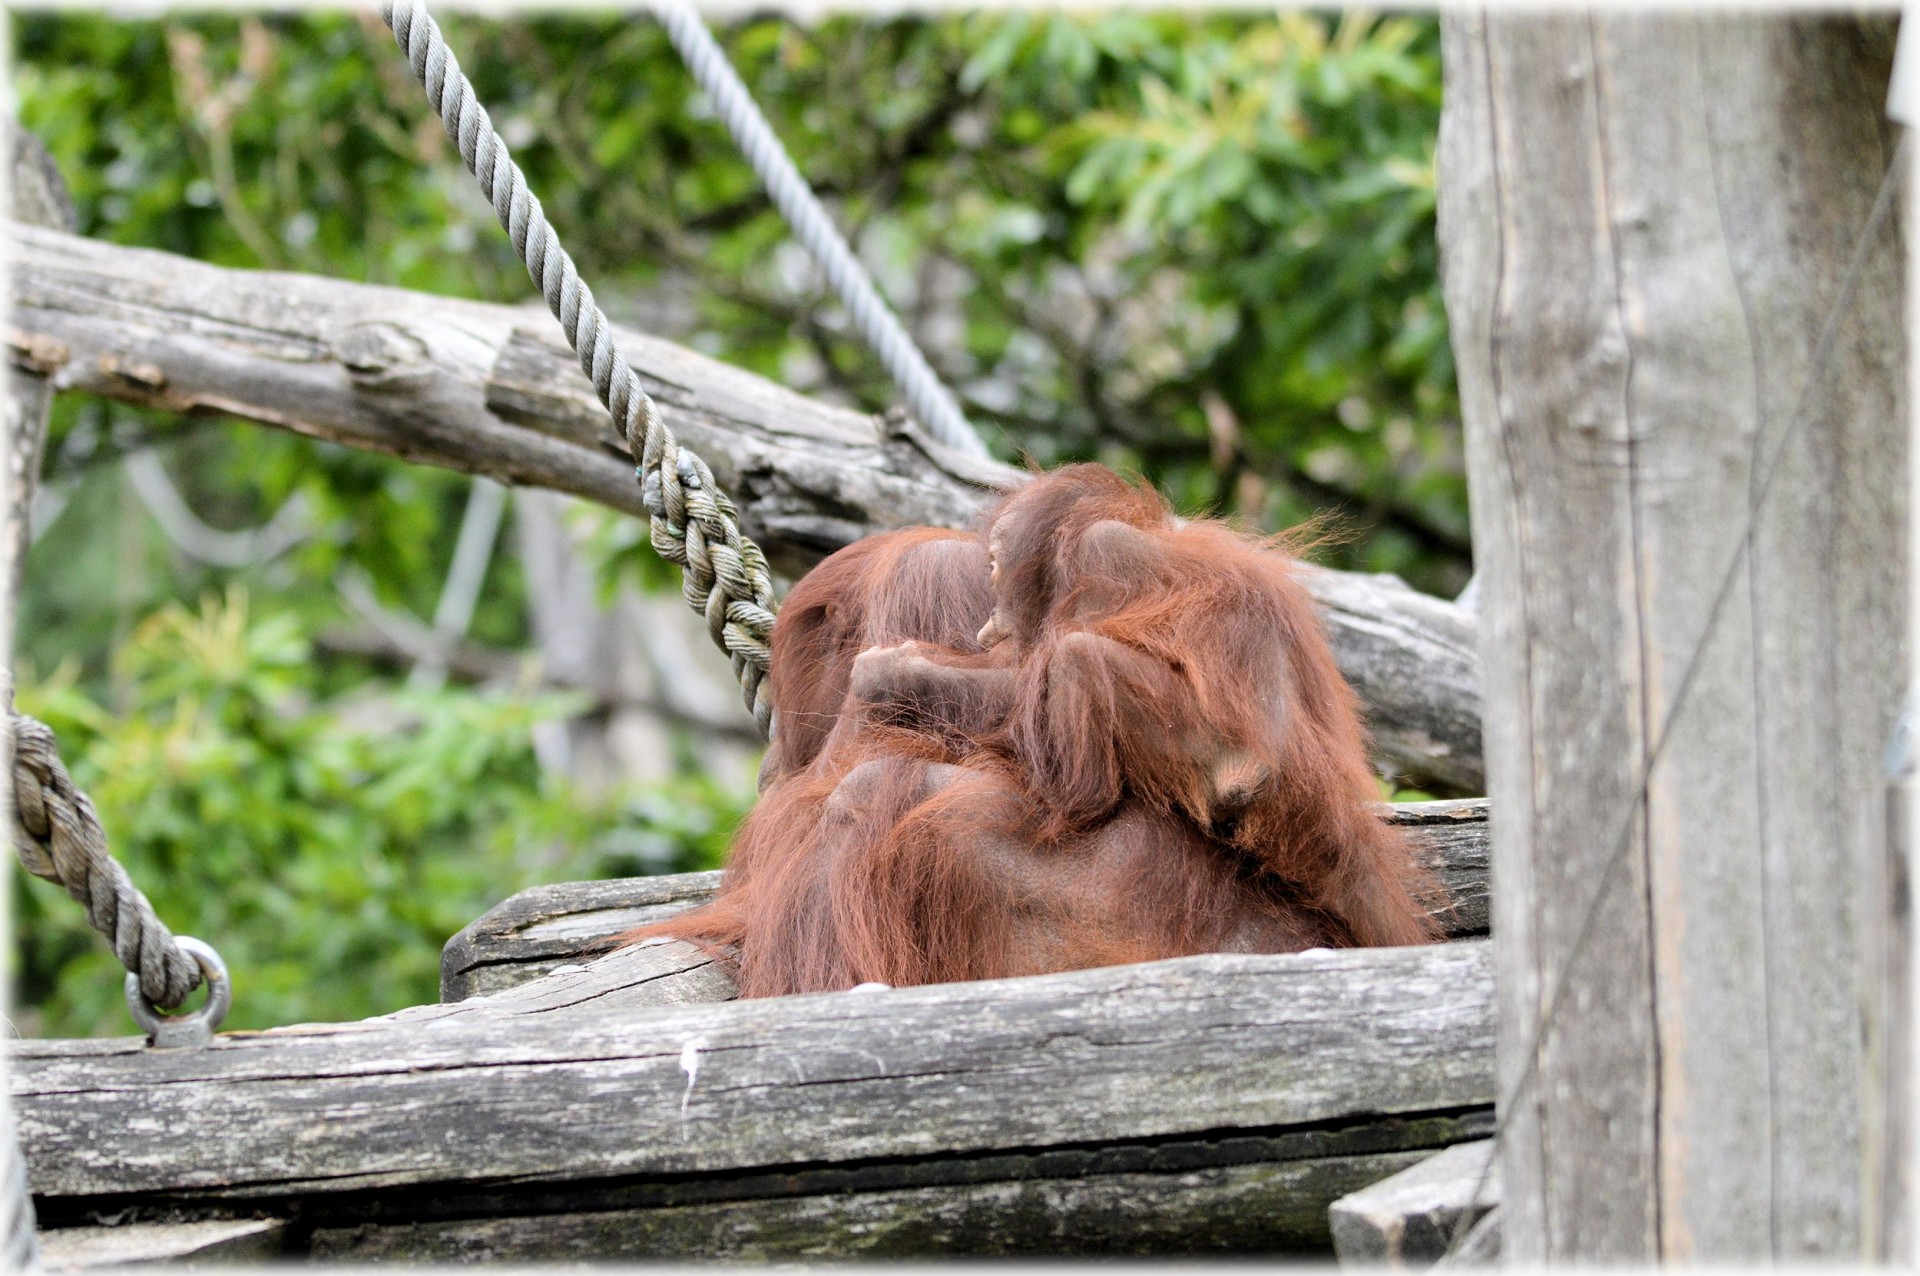 orangutan monkey baby free photo